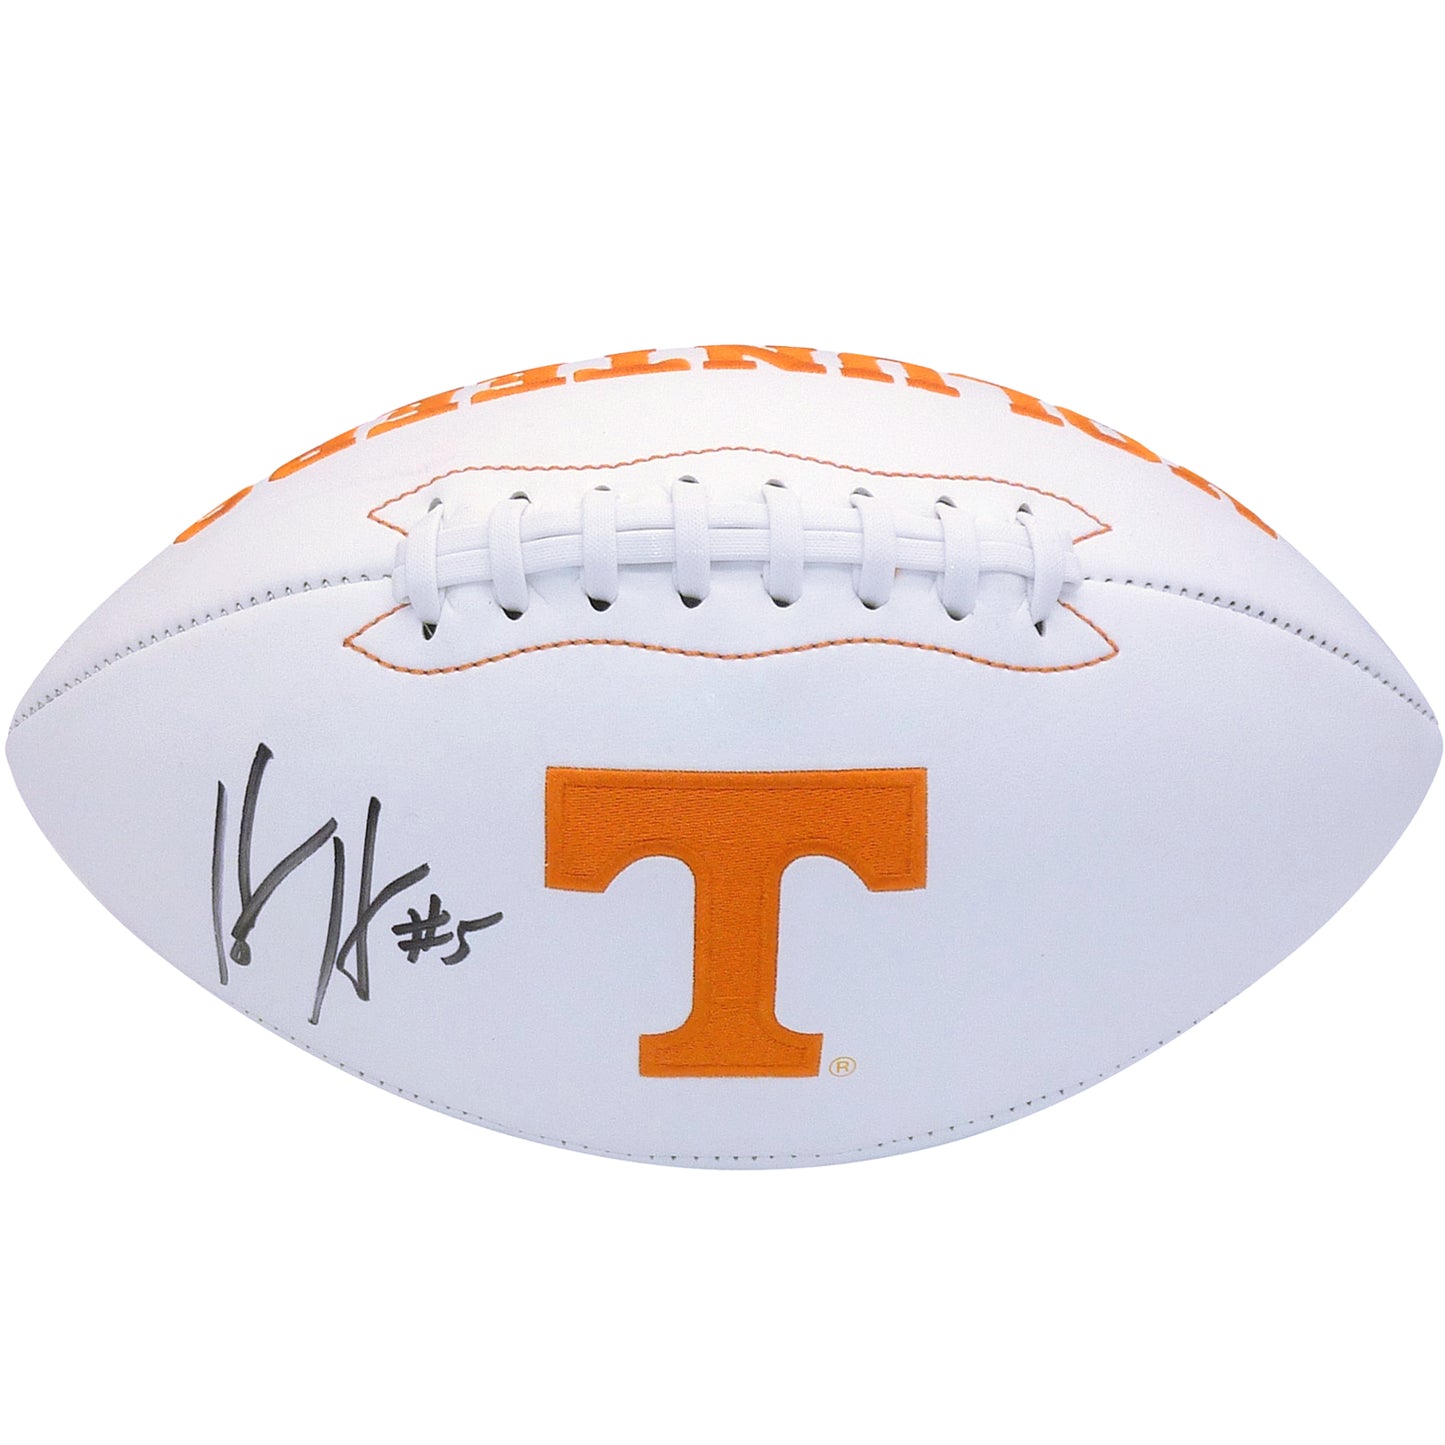 Hendon Hooker Autographed Tennessee Vols Logo Football – JSA